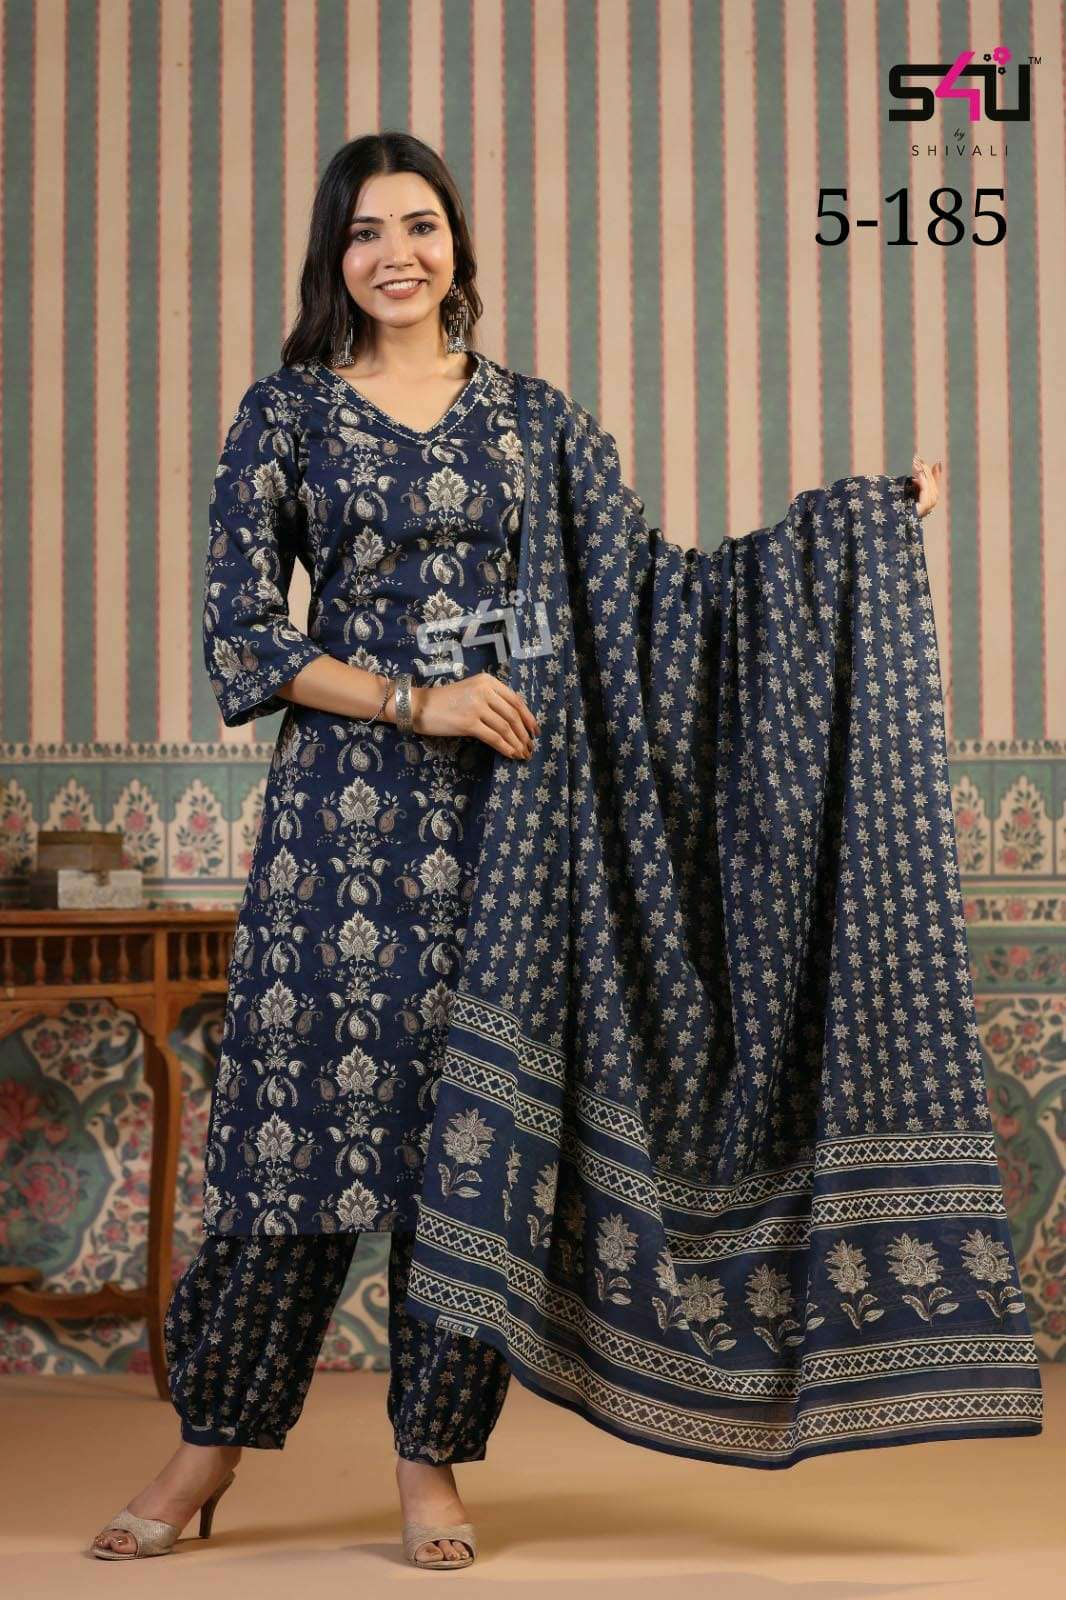 s4U Shivali Lucknowi rayon With Chikankari Embroidery Work Kurti With Pant  Collection